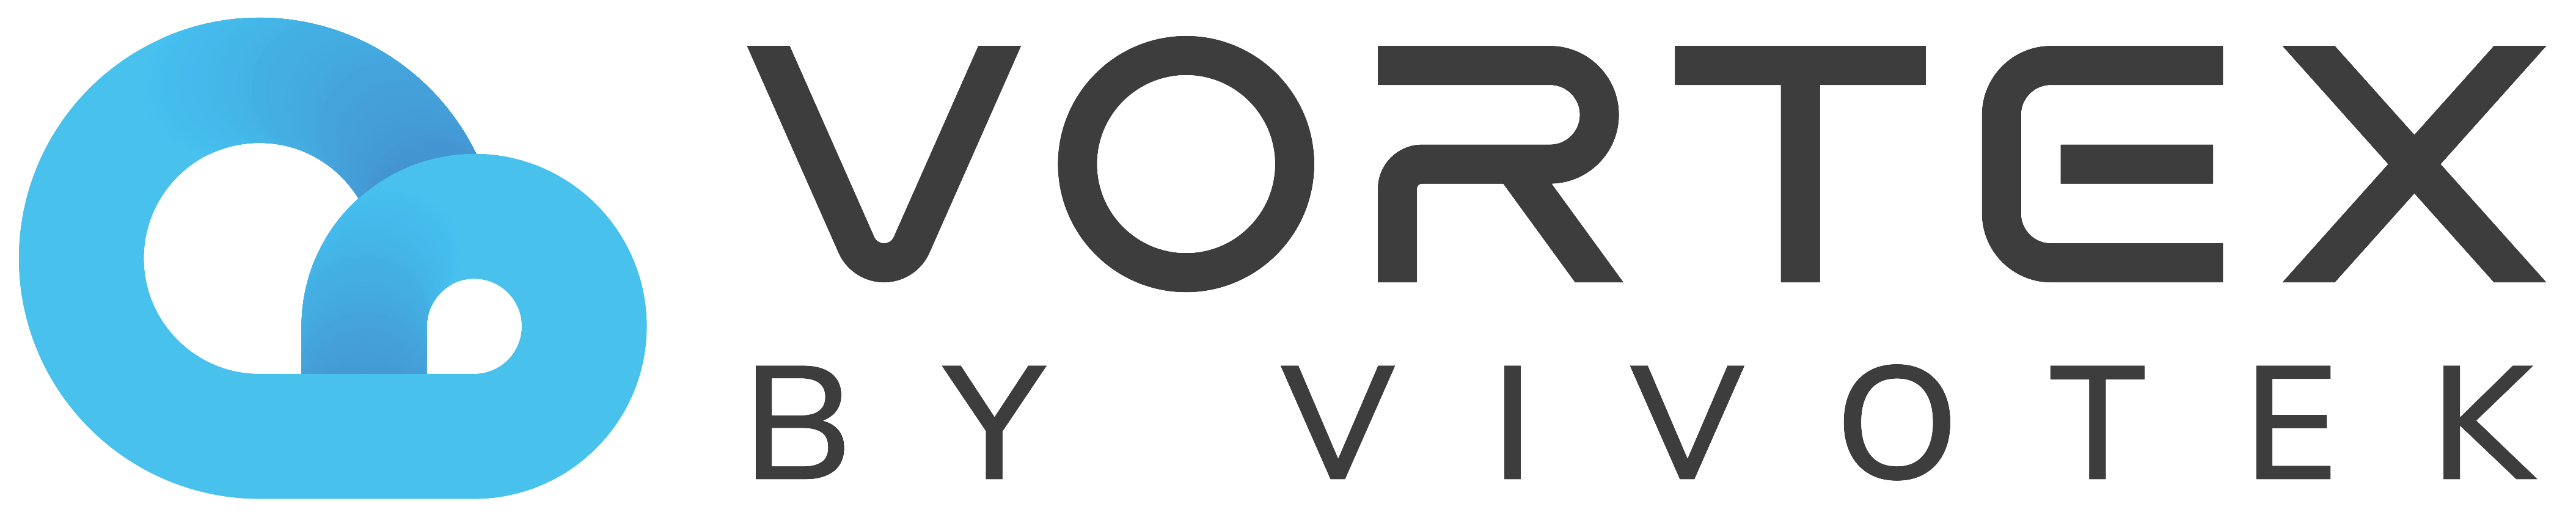 VSaaS - Video Surveillance as a Service  Logo